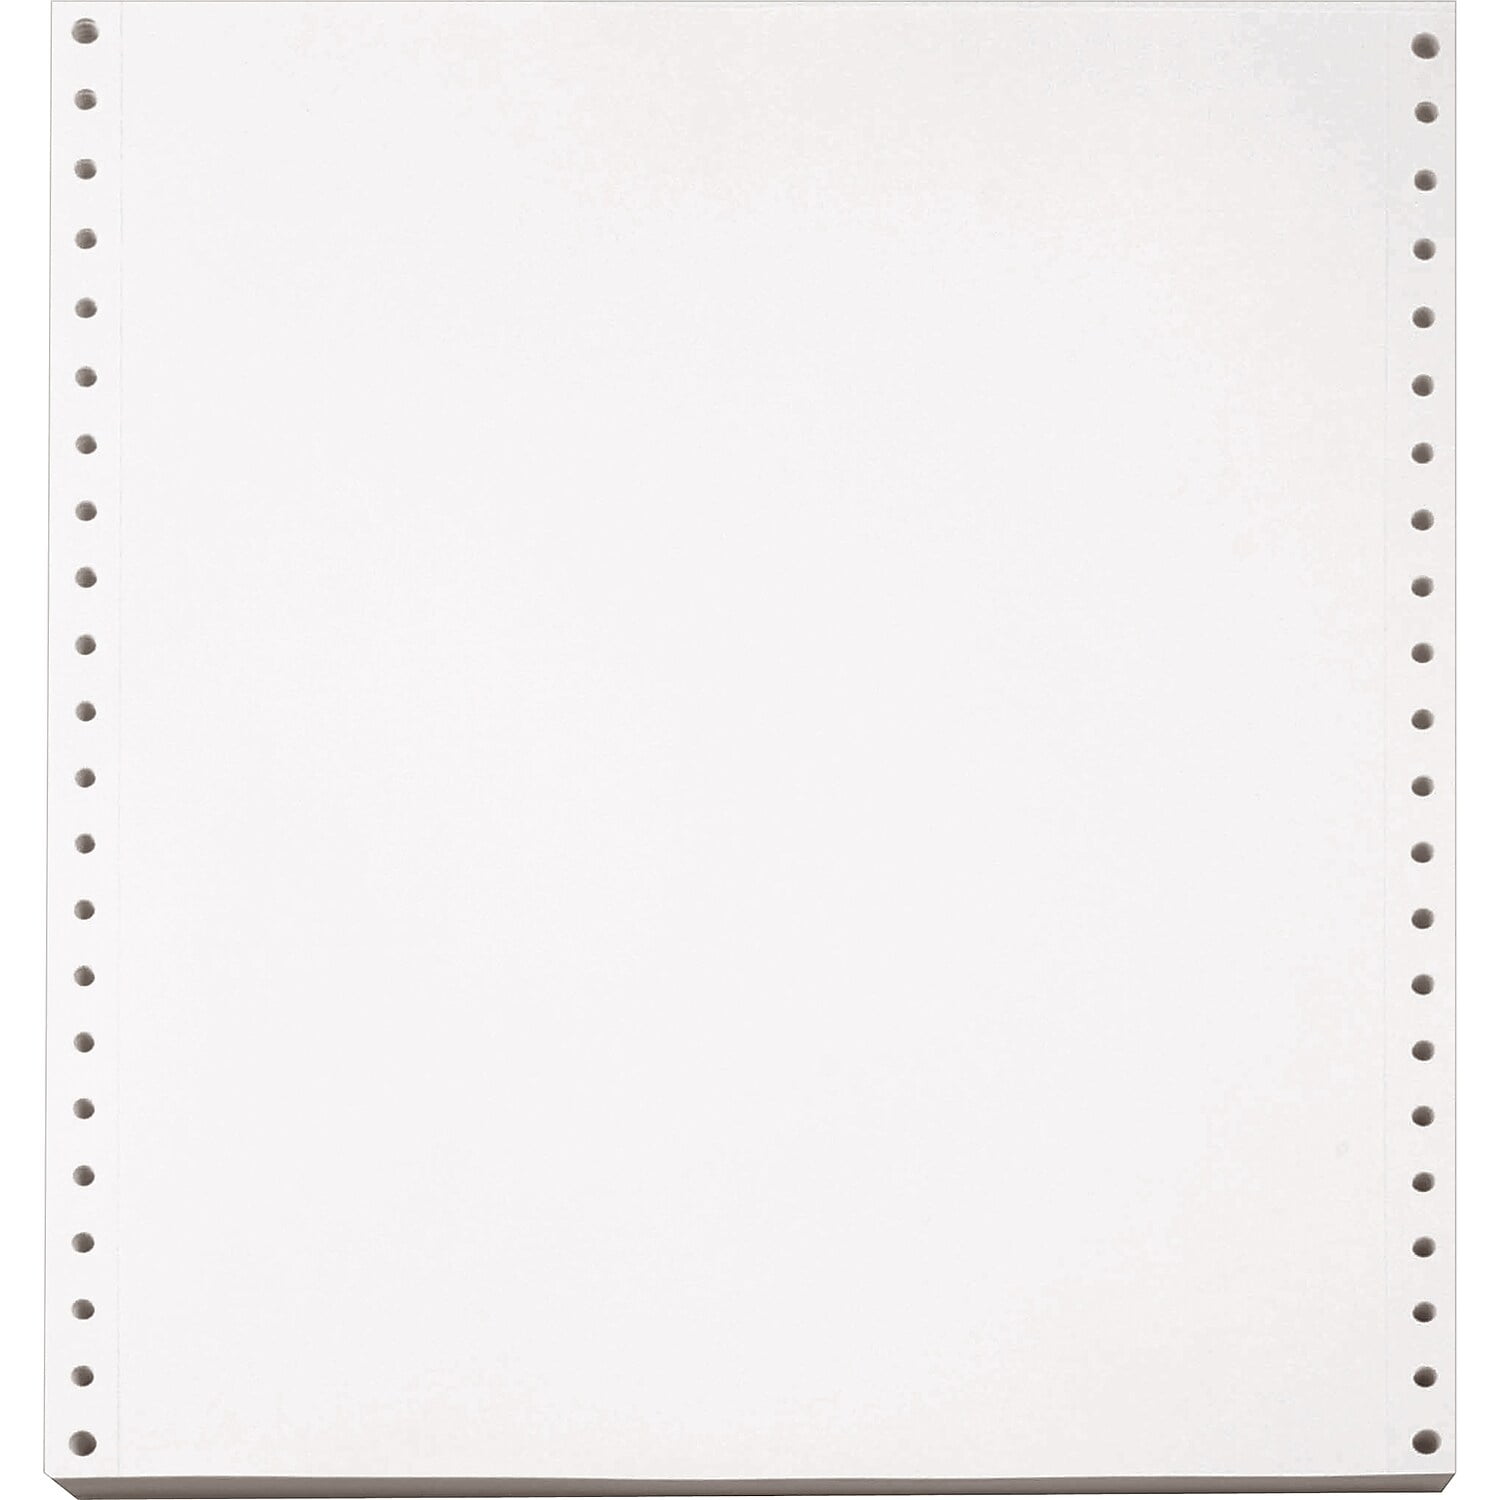 Hammermill Printer Paper, 28lb Premium Color Copy, White, 8.5x11, 5 Ream,  2500 Sheets 